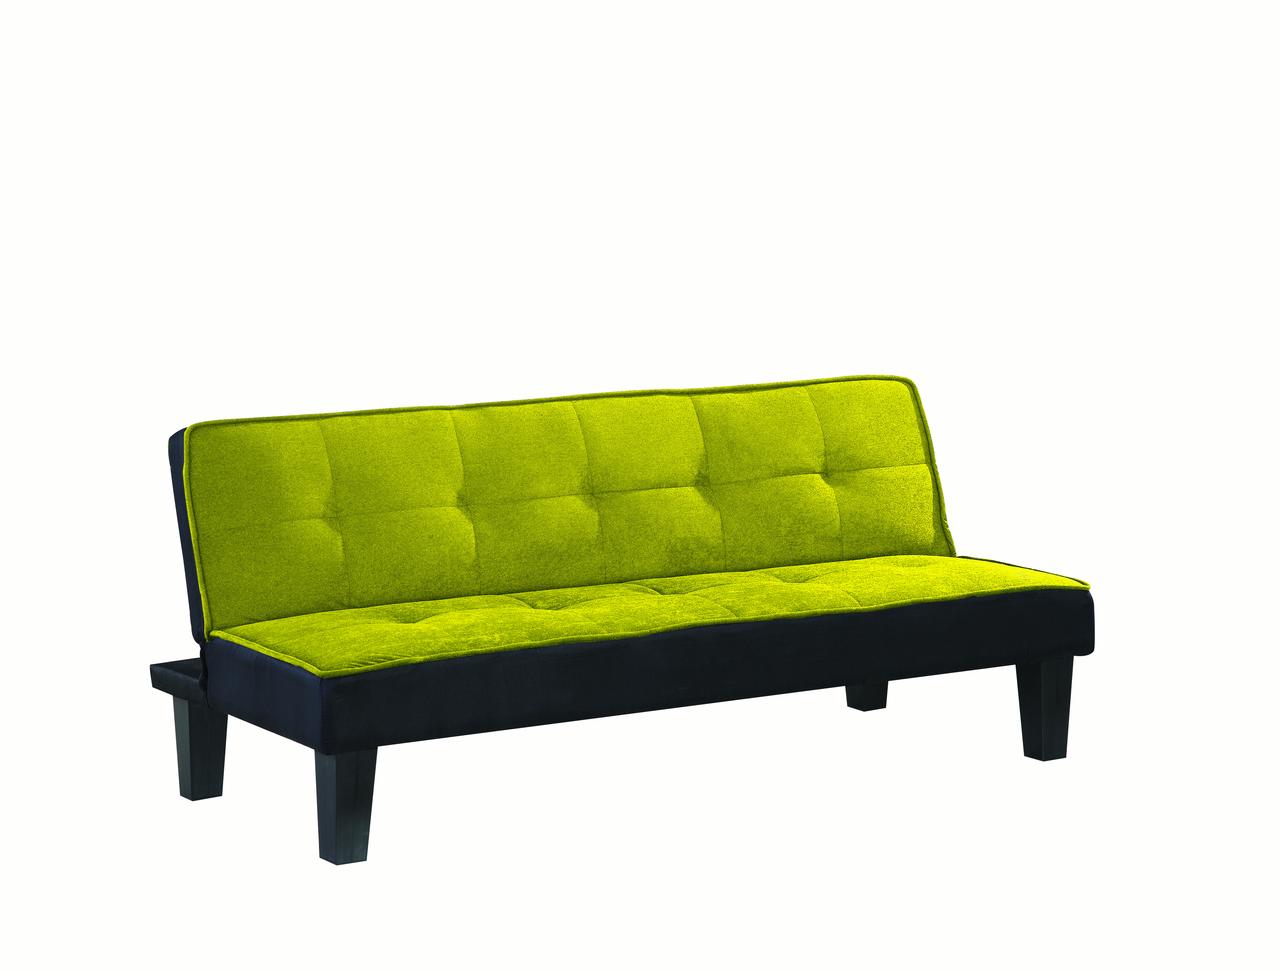 ACME Furniture Hamar Flannel Futon, Multiple Colors - image 1 of 2